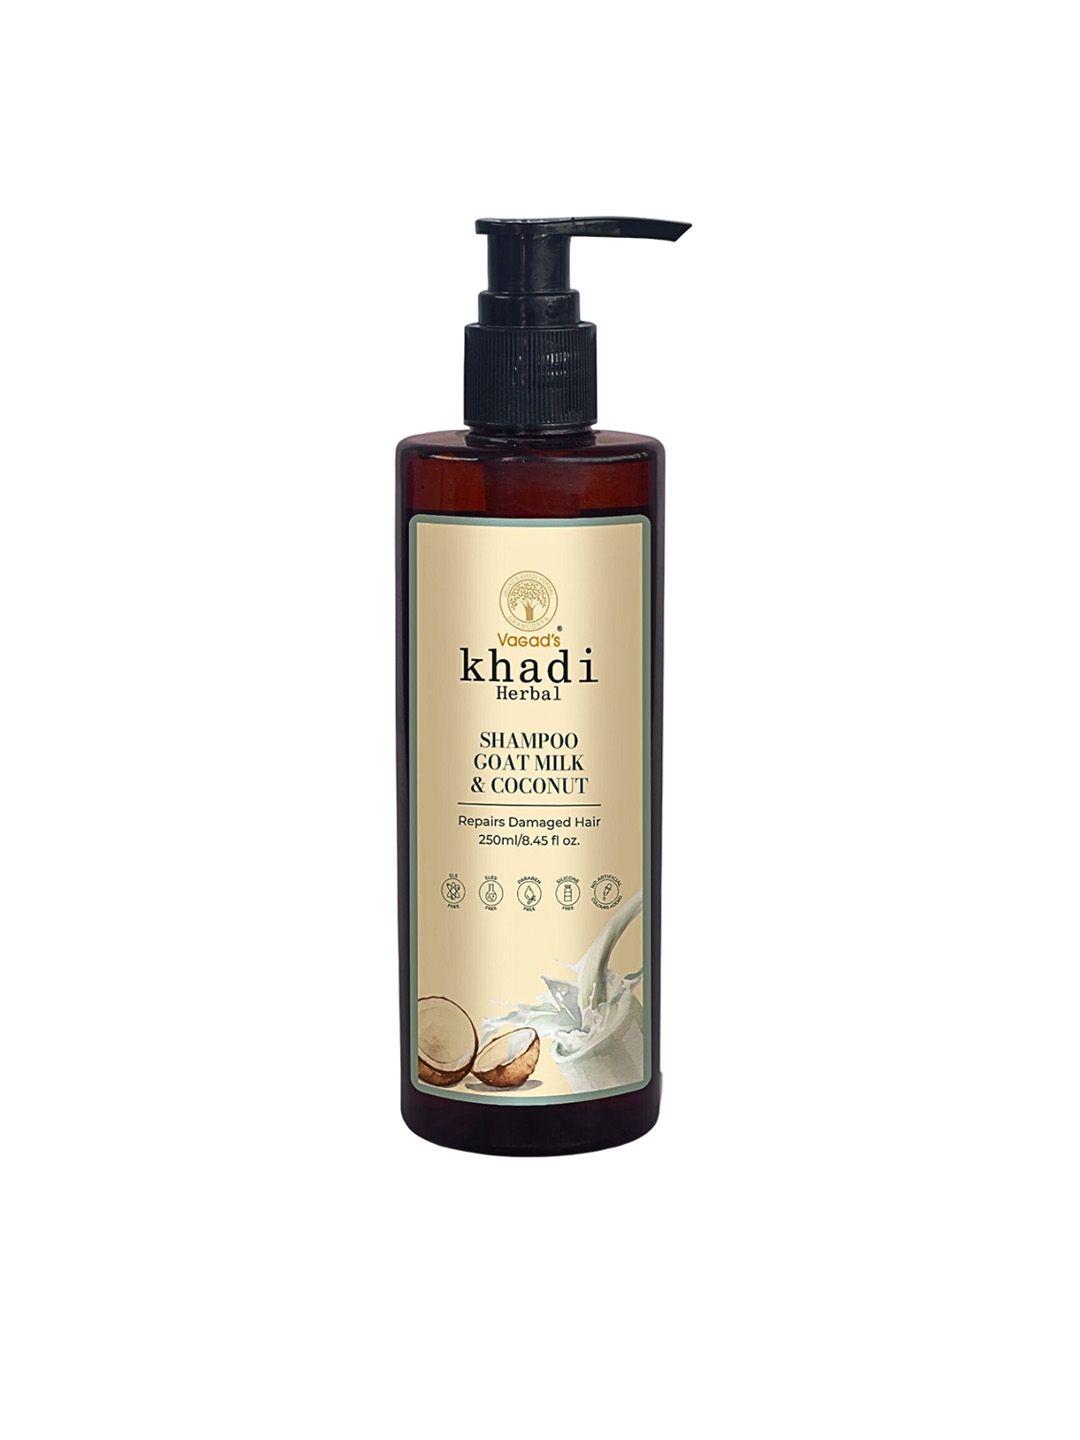 vagads-khadi-herbal-goat-milk-&-coconut-shampoo---250ml